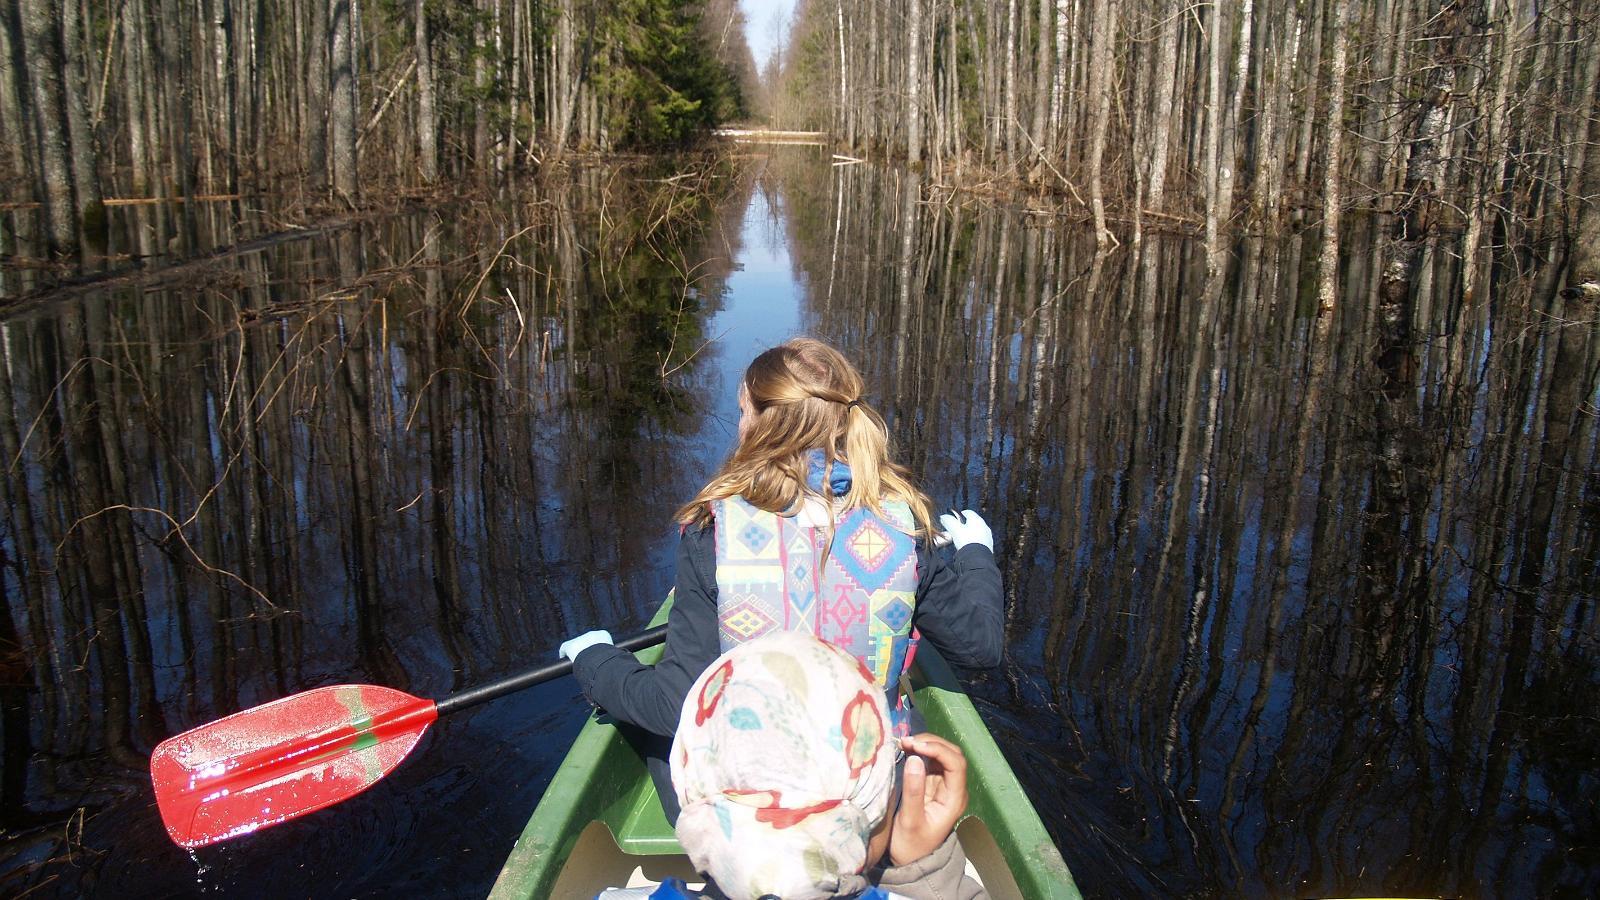 Fifth season canoeing trip in Soomaa